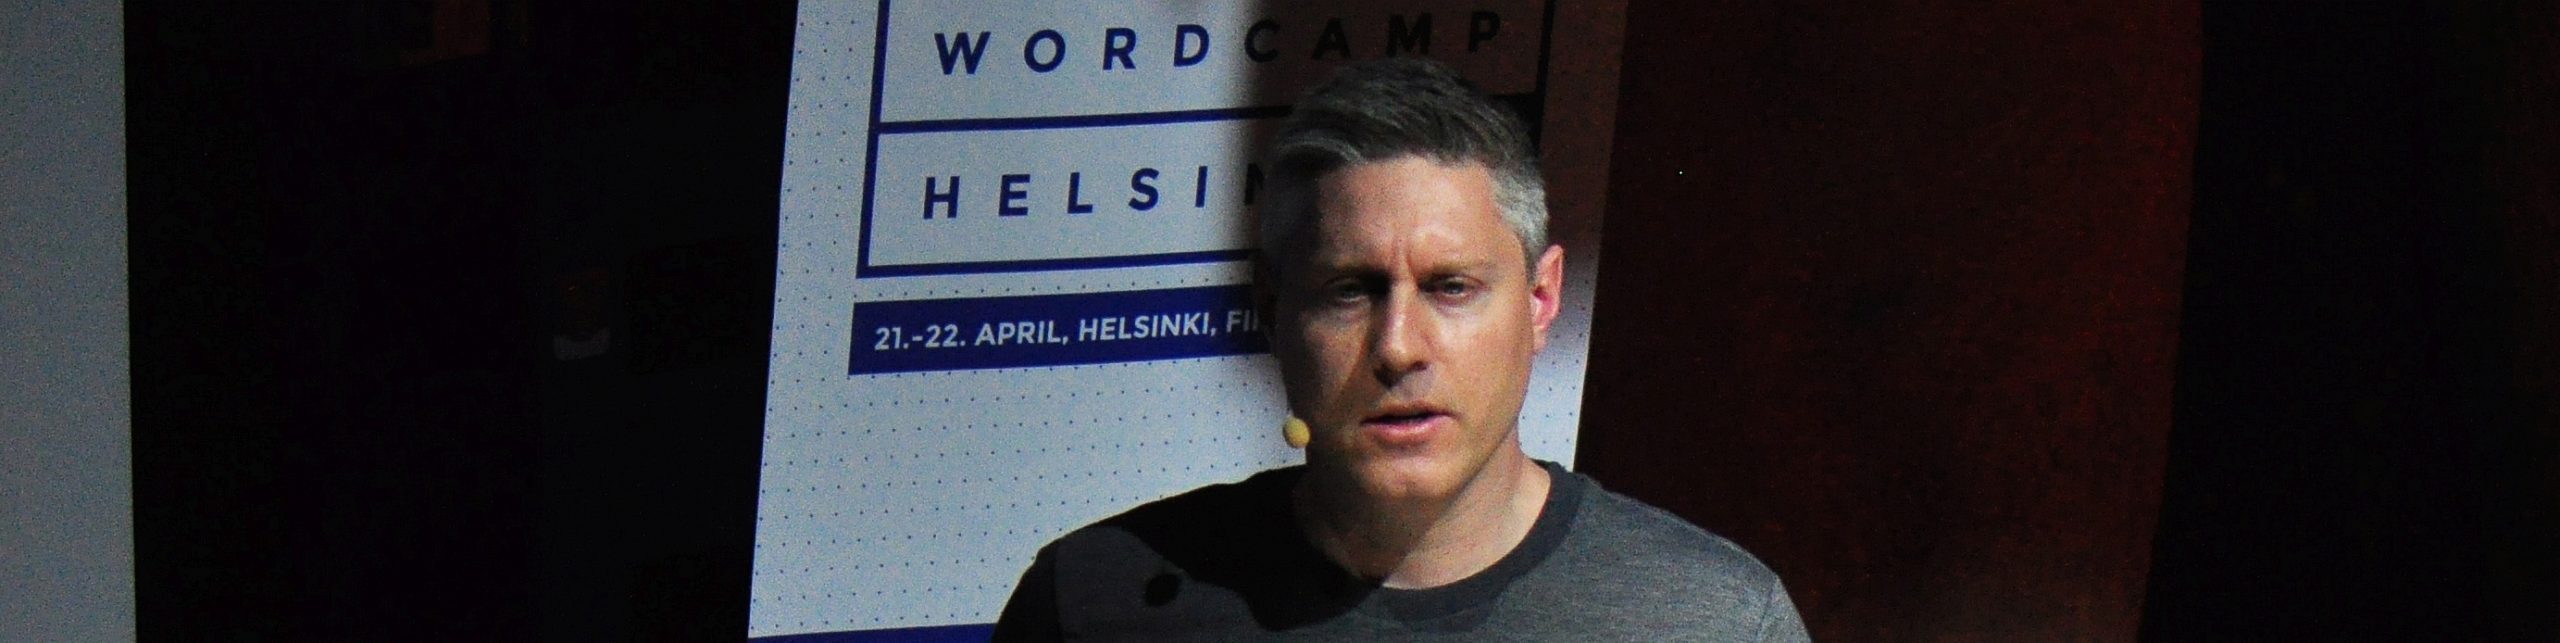 WordCam Helsinki 2017 Edmund Turbin